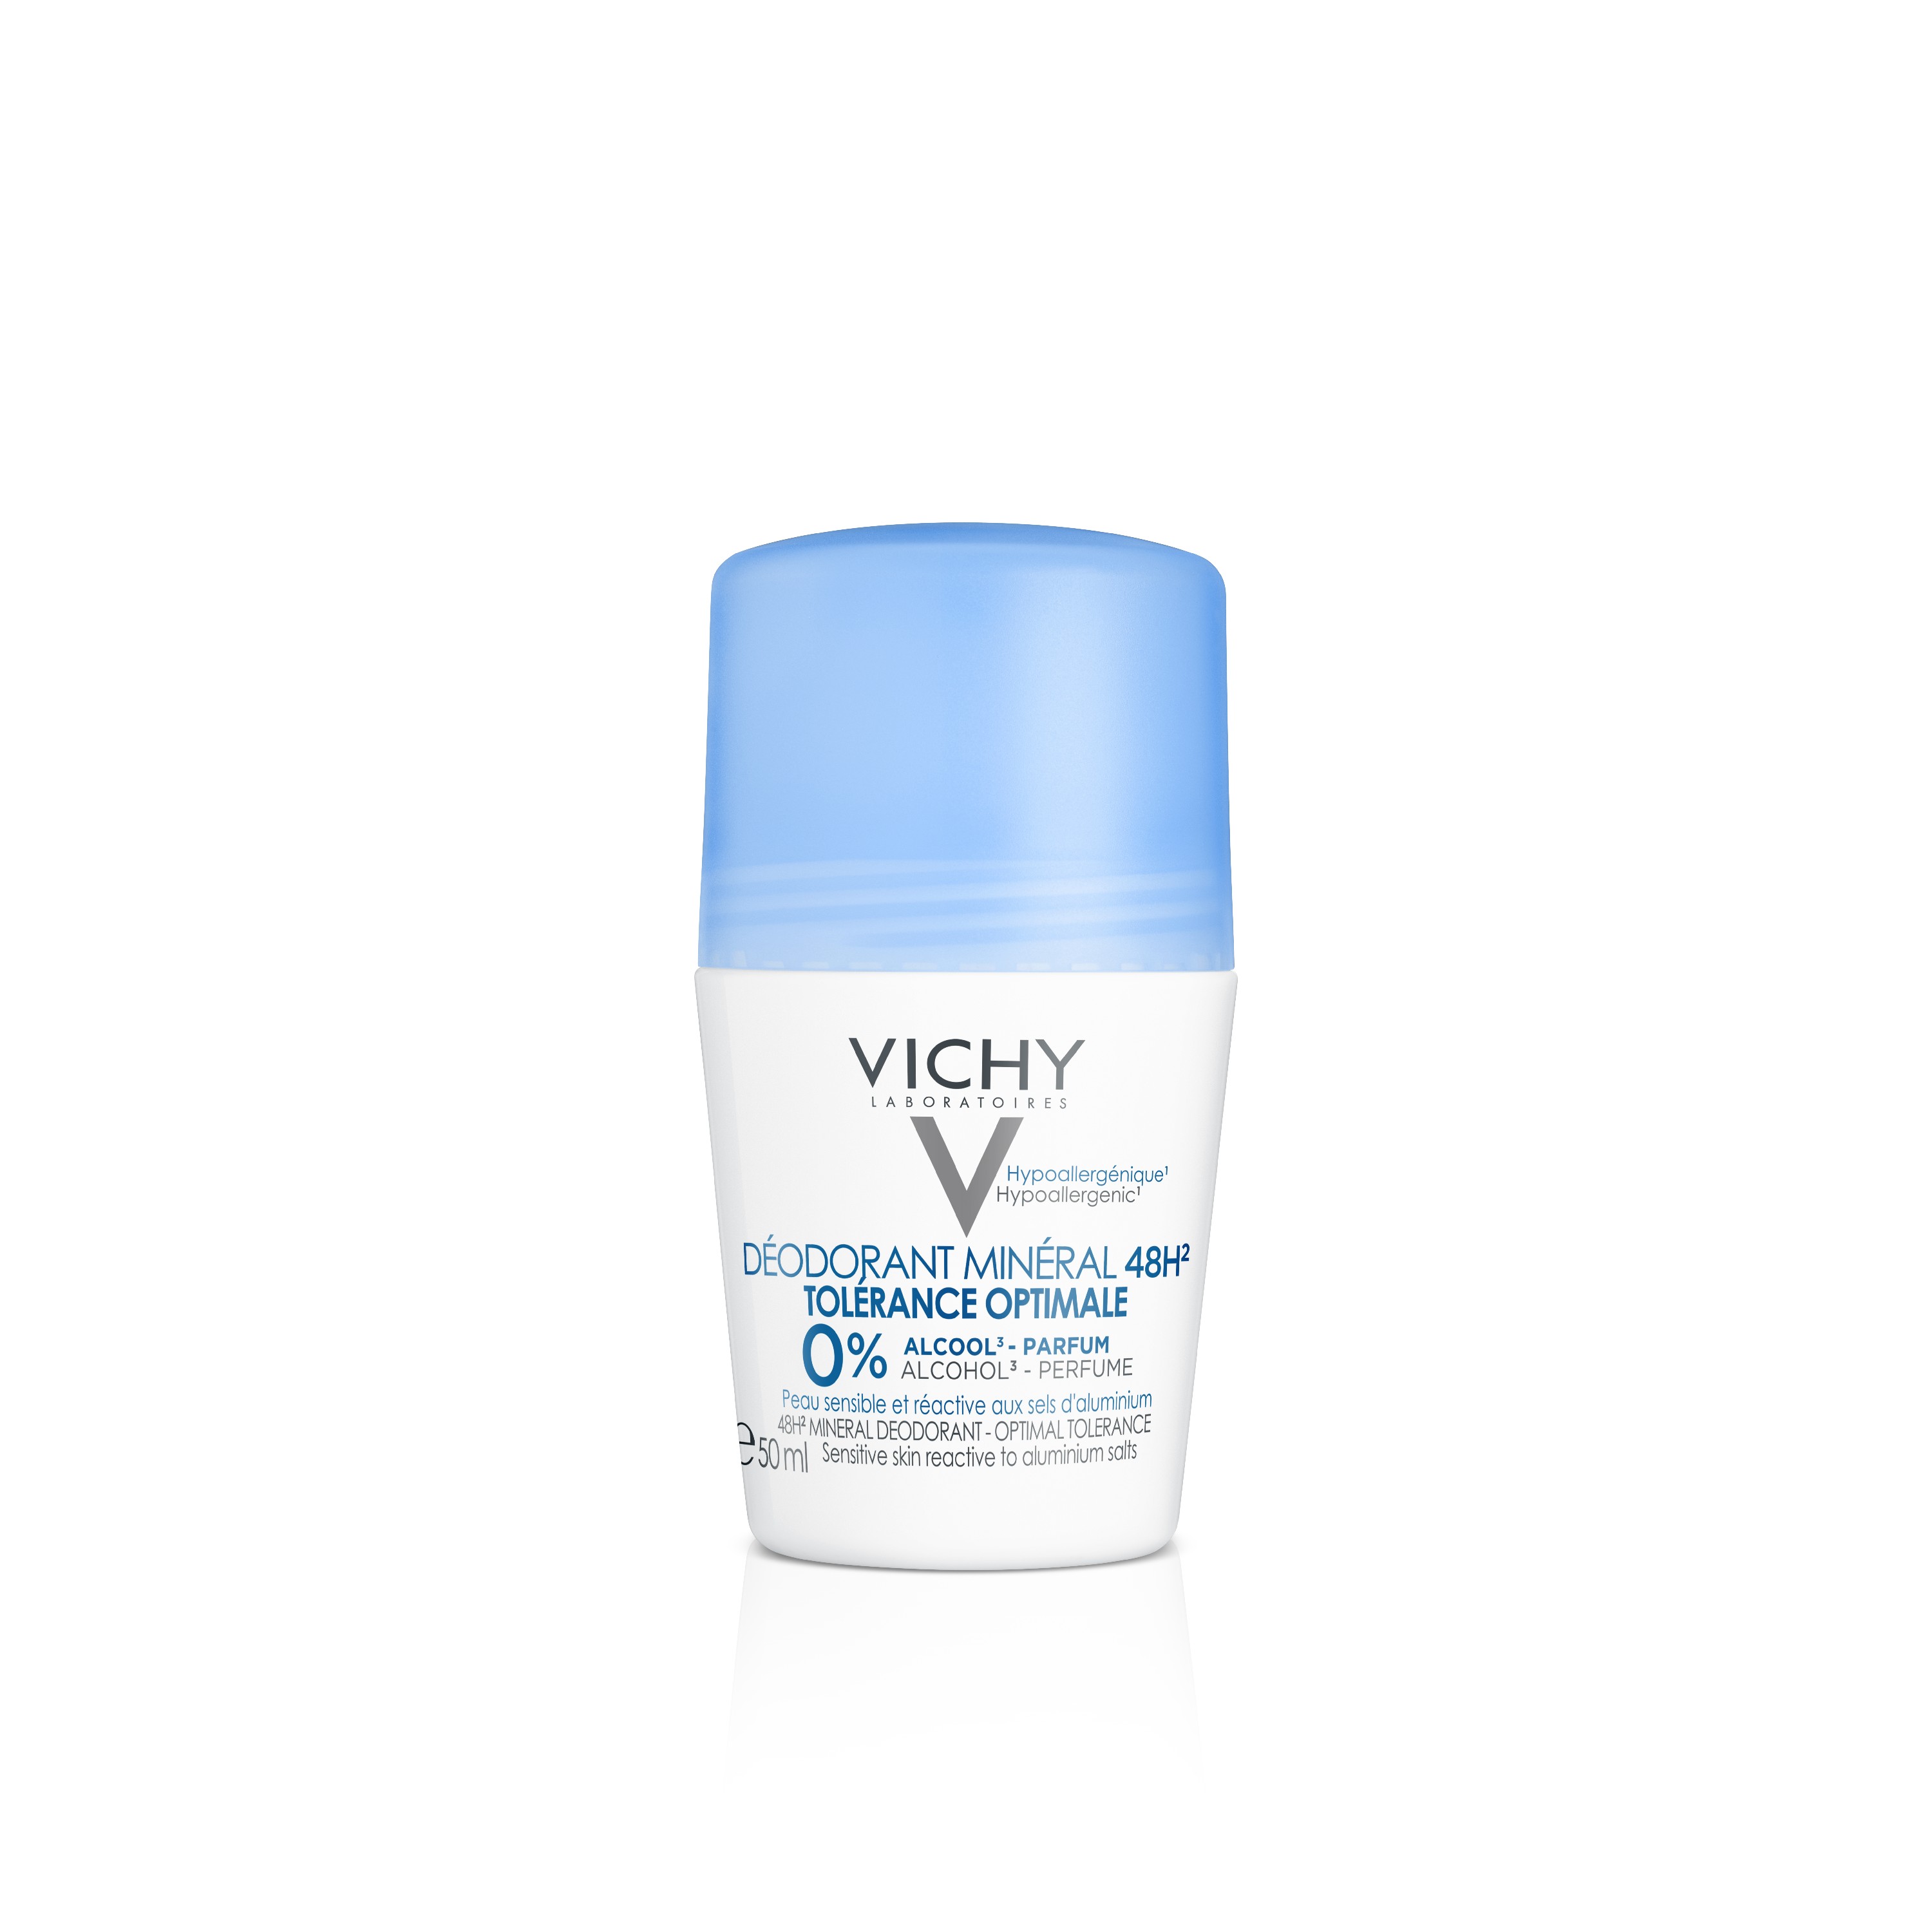 Vichy Desodorante Mineral 48h, 50ml.